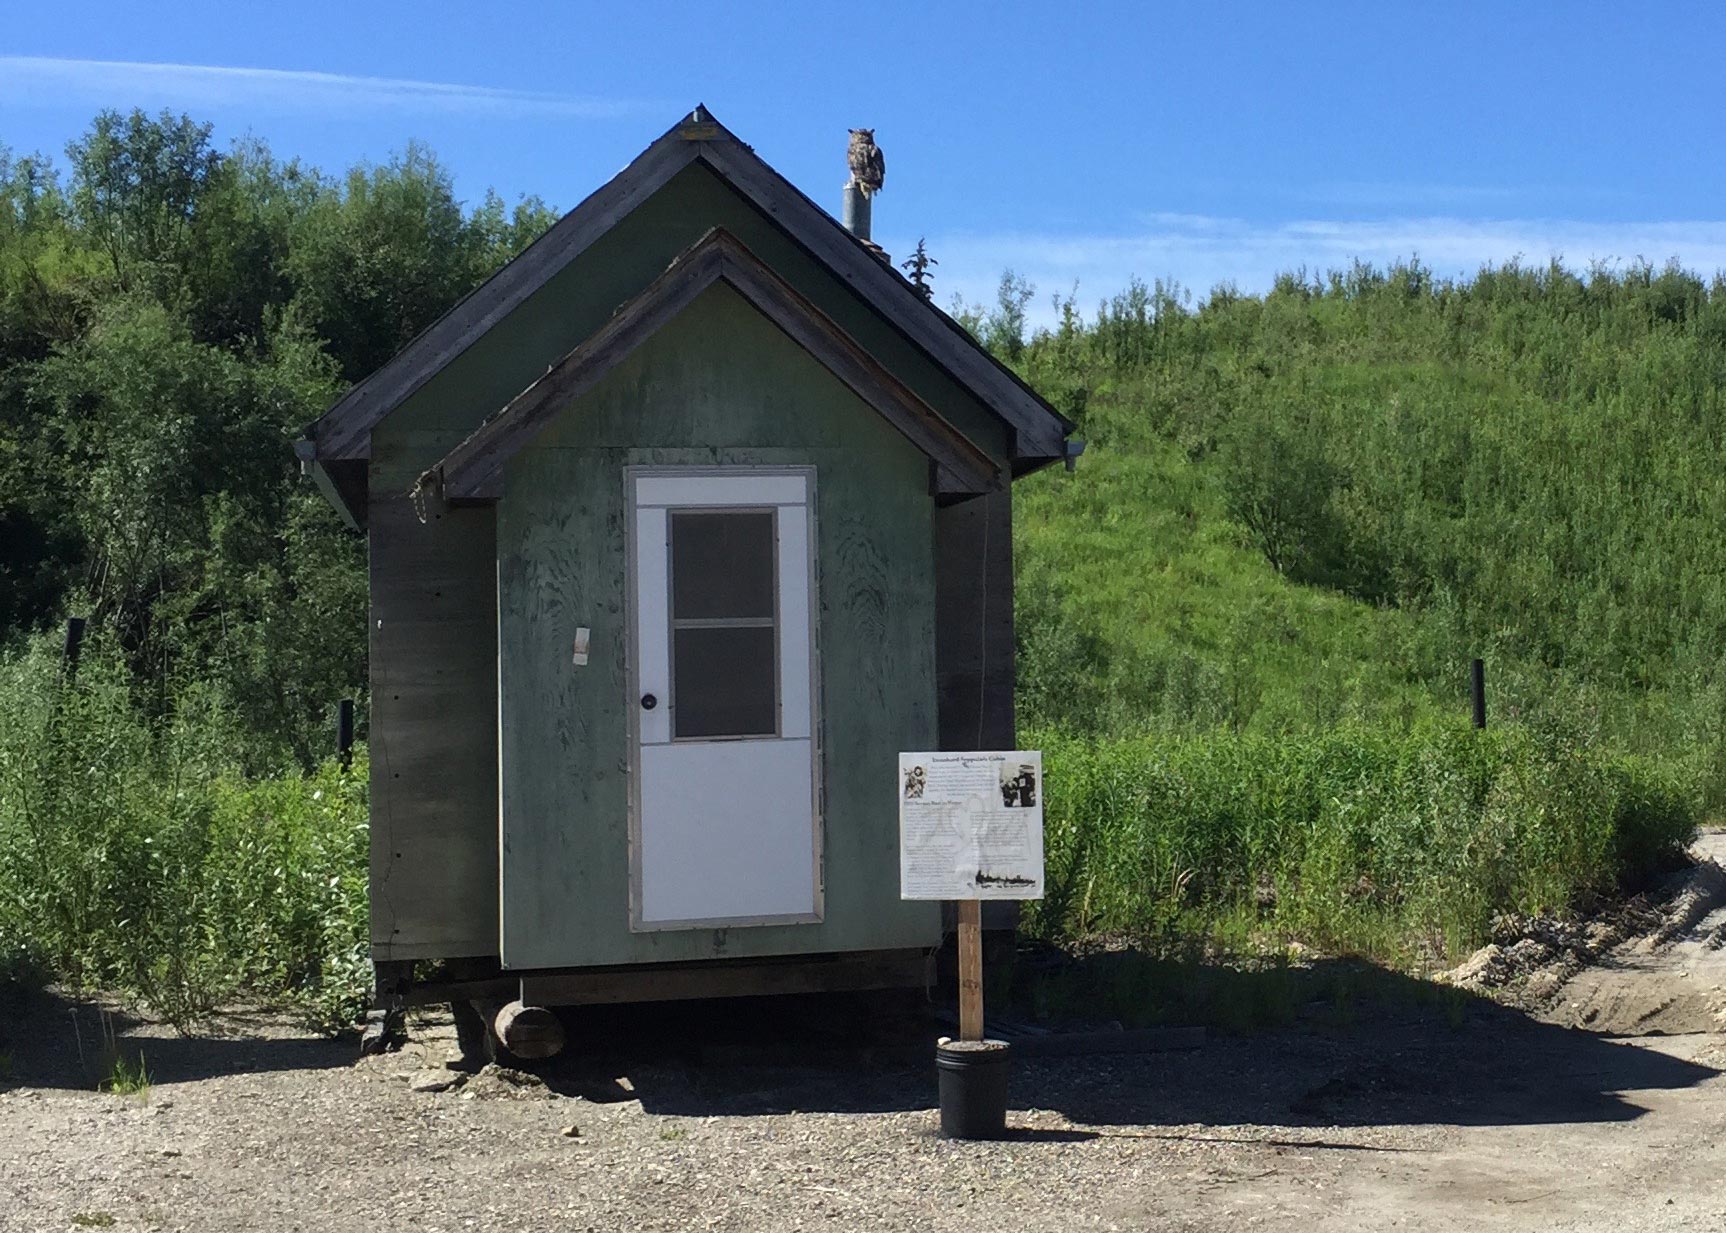 Leahnard Sepalla's cabin